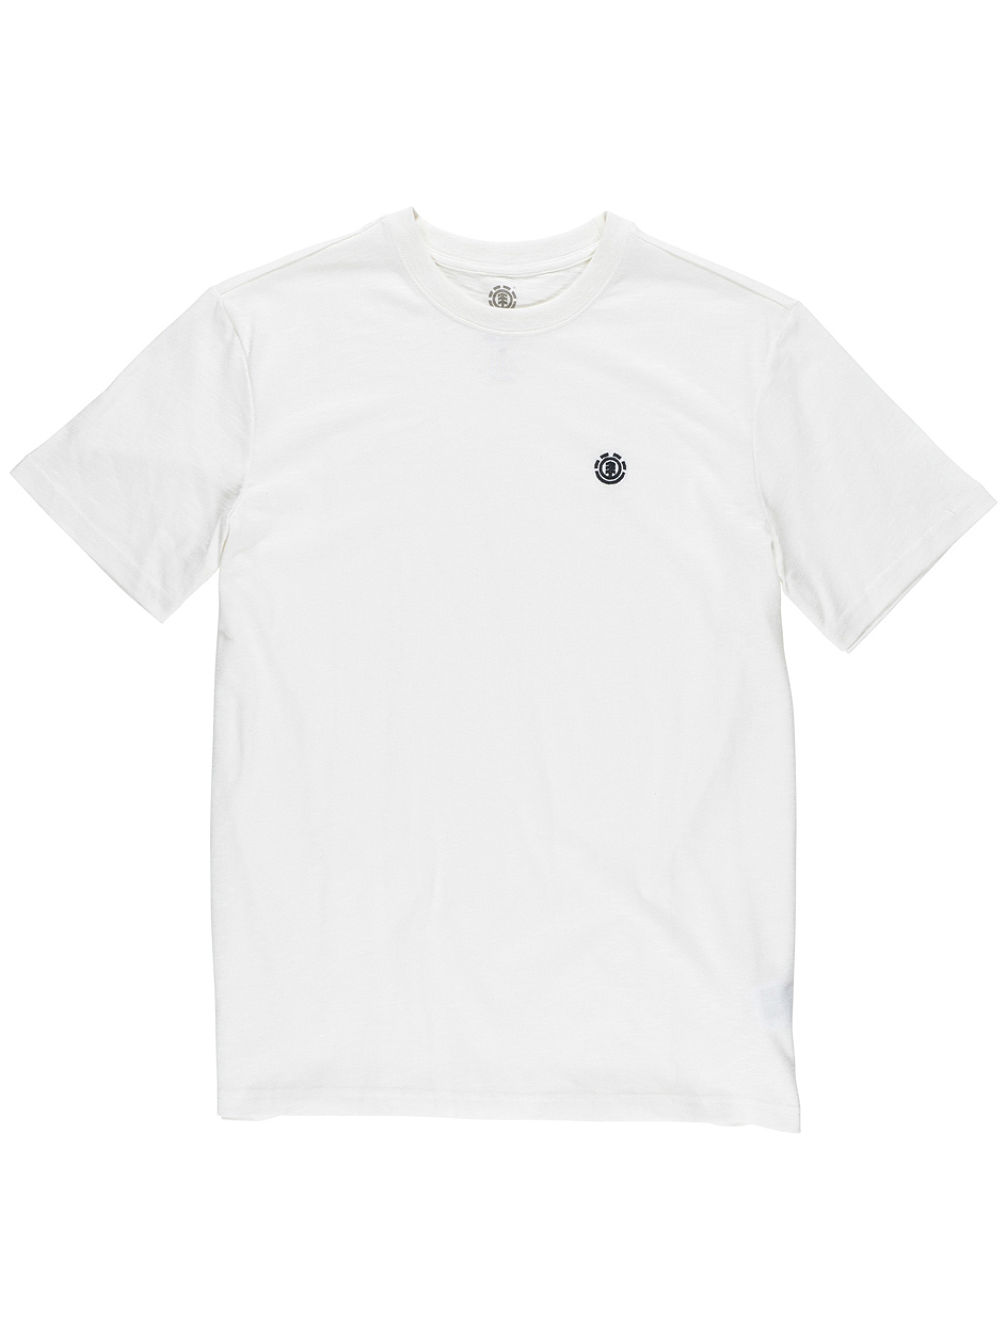 Crail T-Shirt